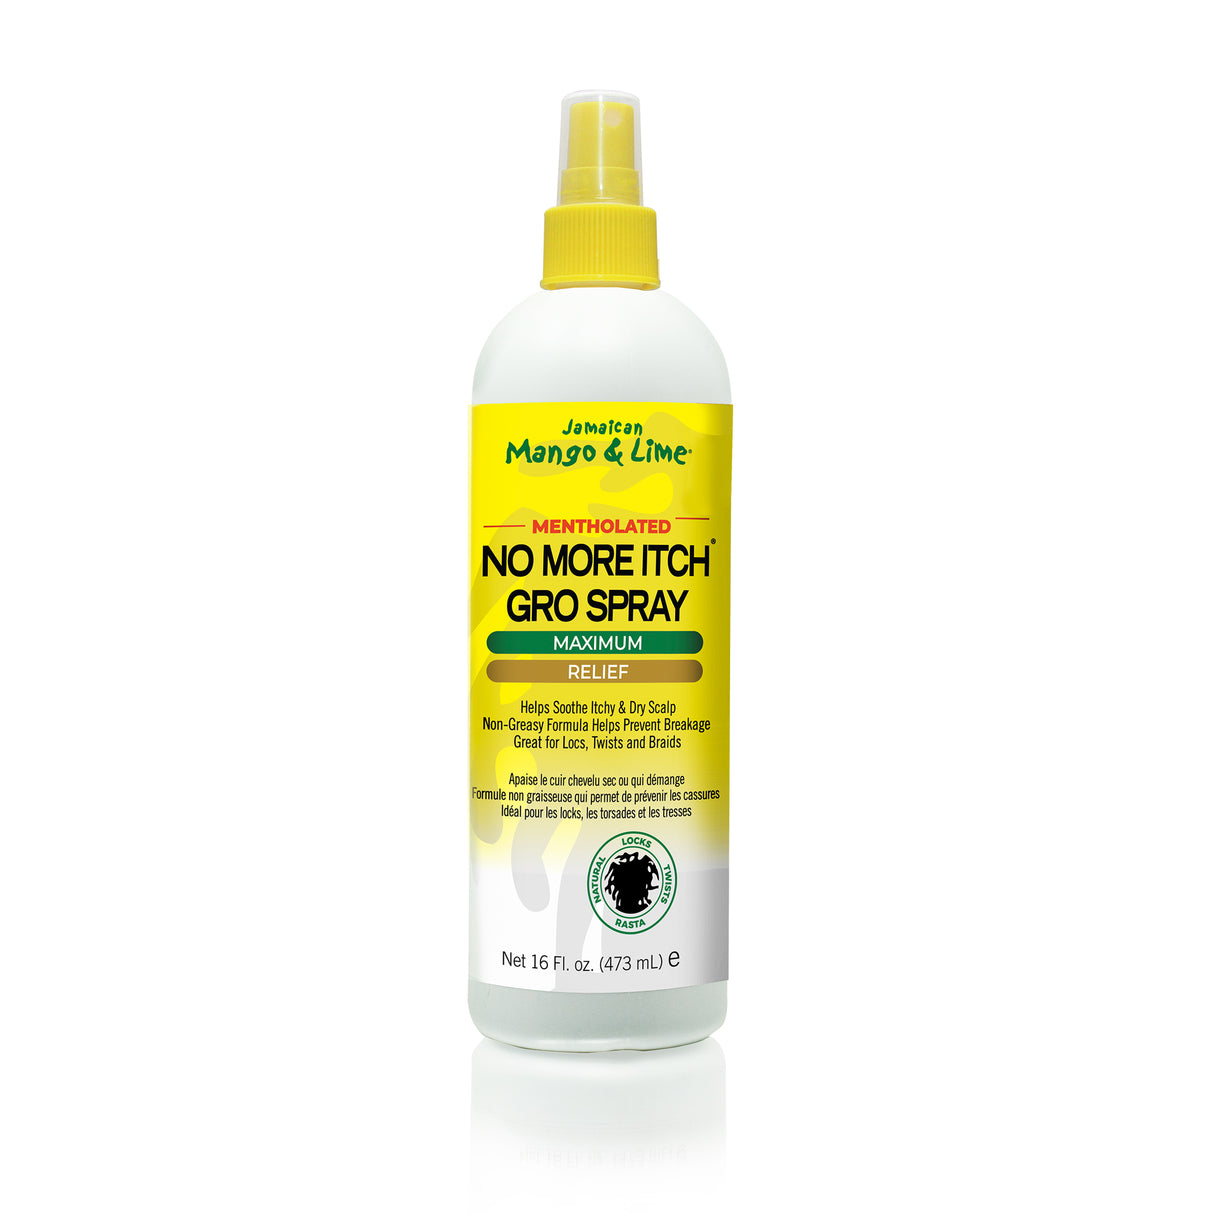 Jamaican Mango & Lime® Mentholated No More Itch Gro Spray